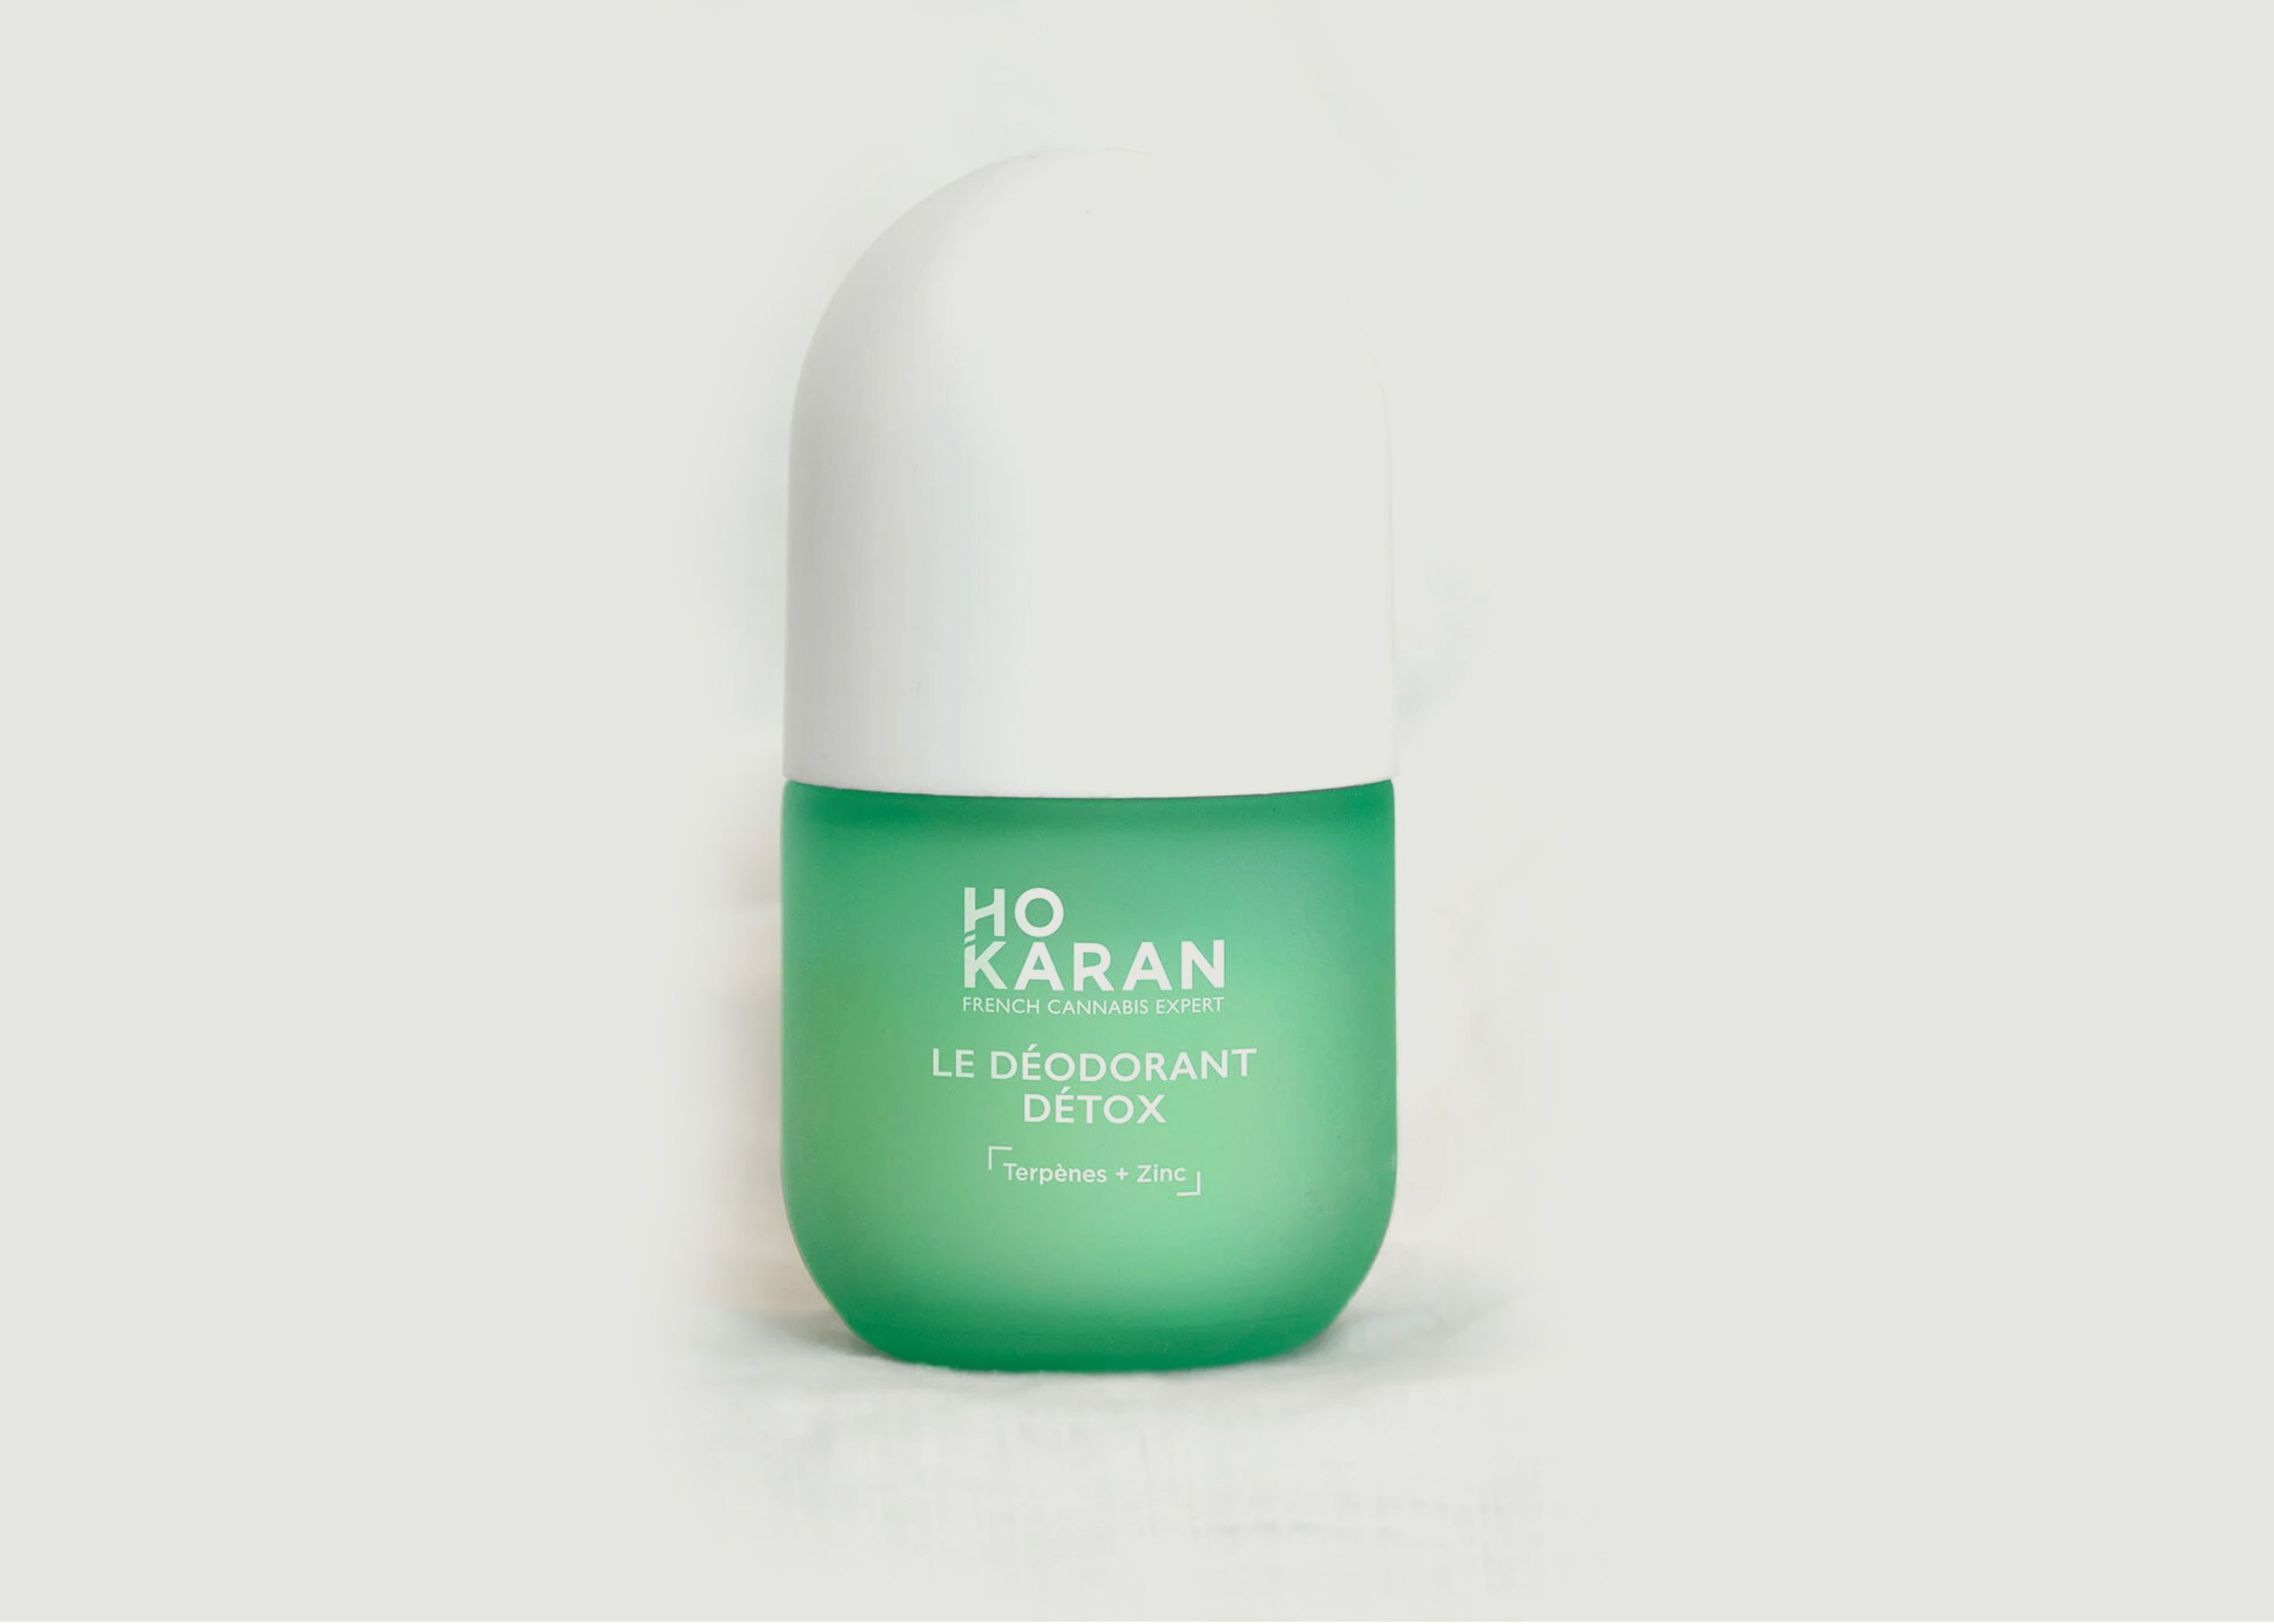 The detox deodorant - Ho Karan